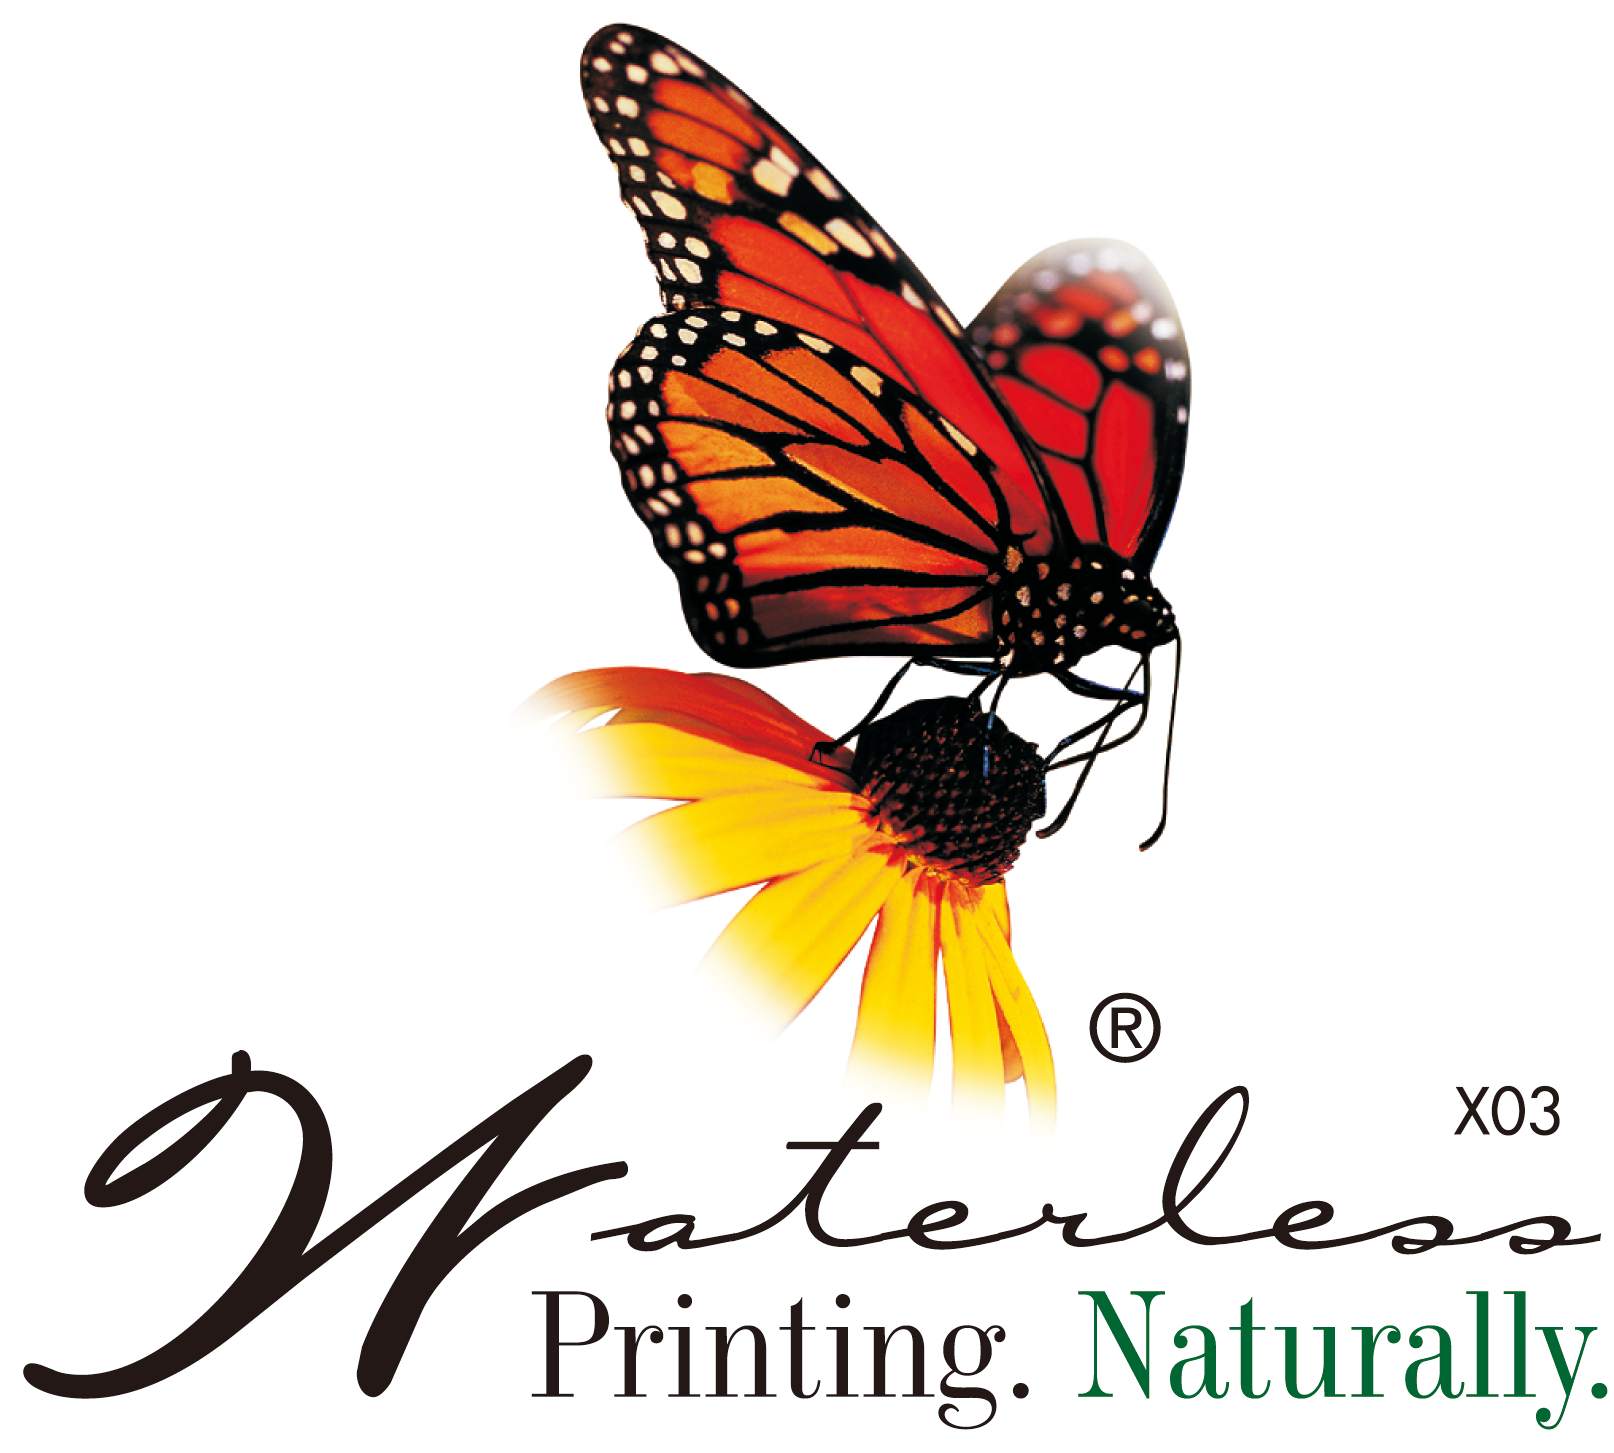 Butterfly mark (Japan Waterless Printing Association)